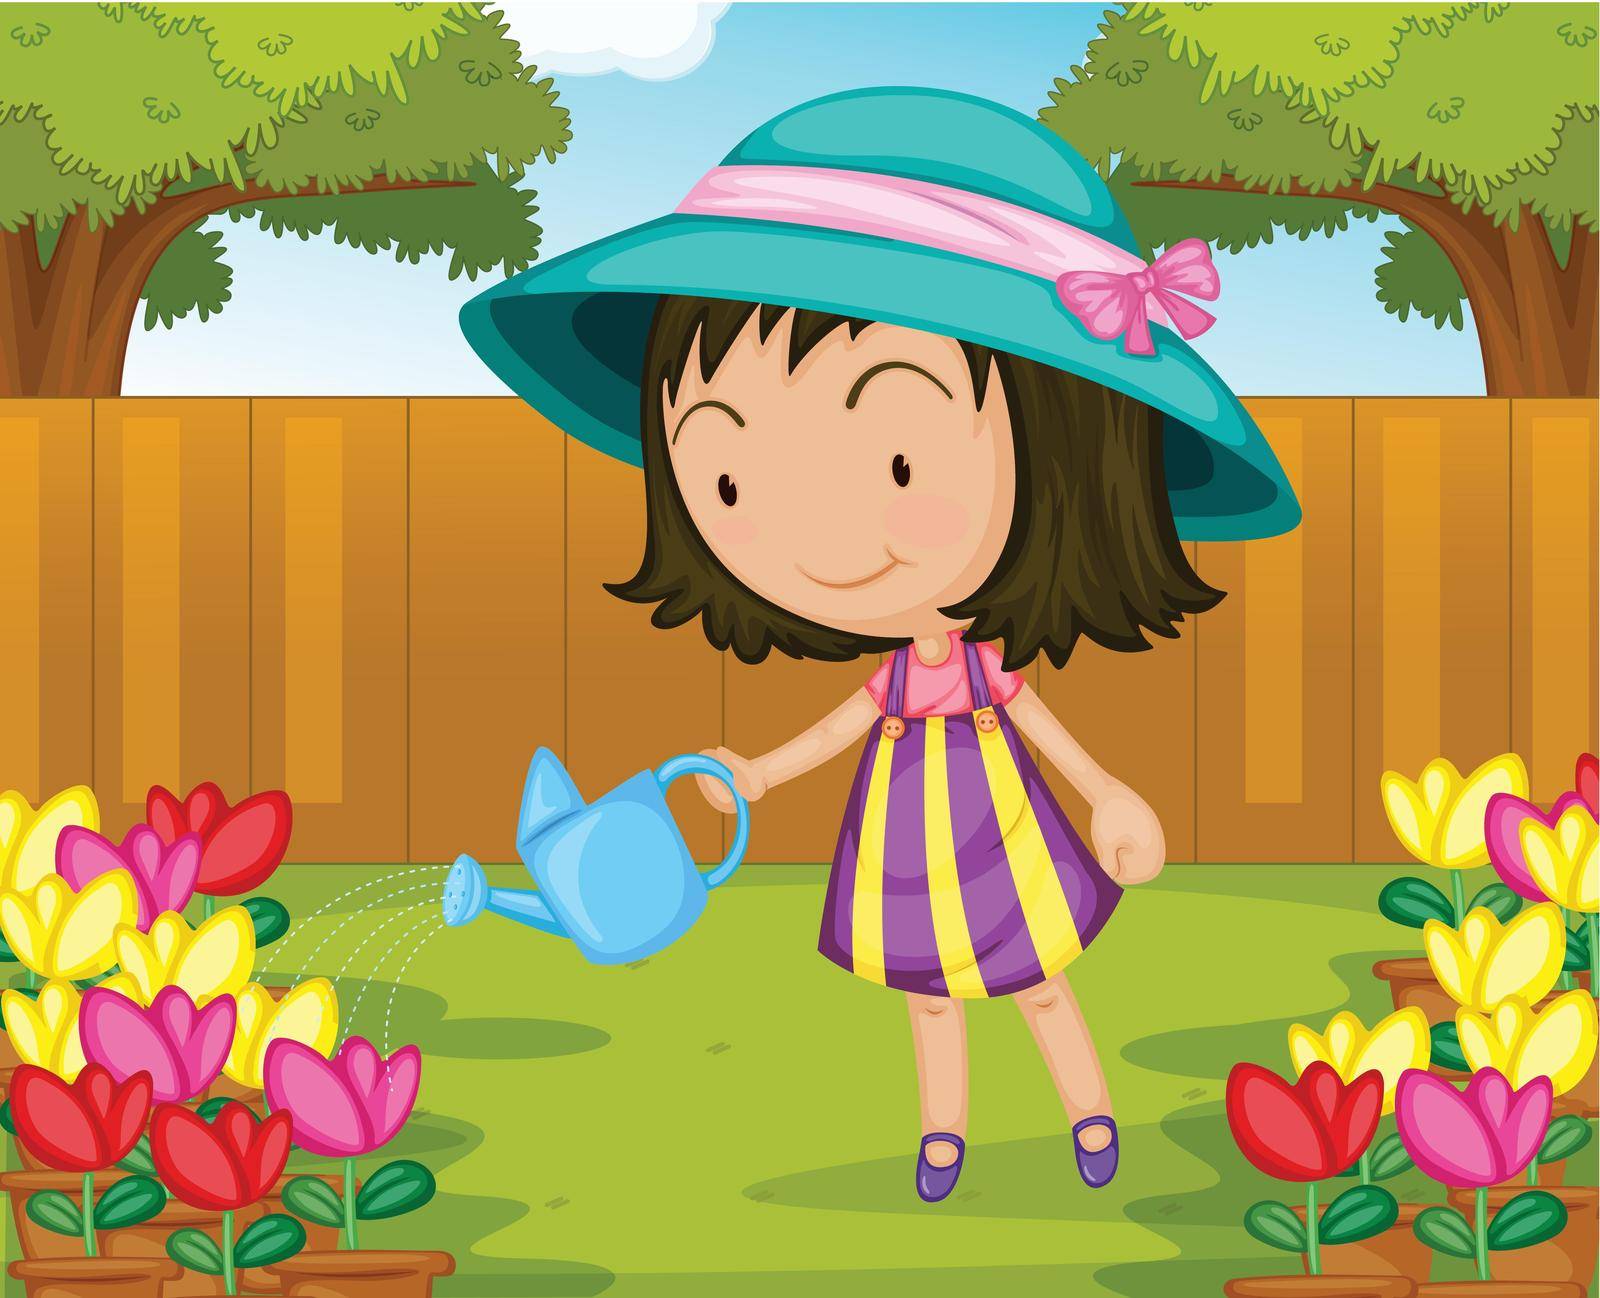 Illustration of girl watering plants